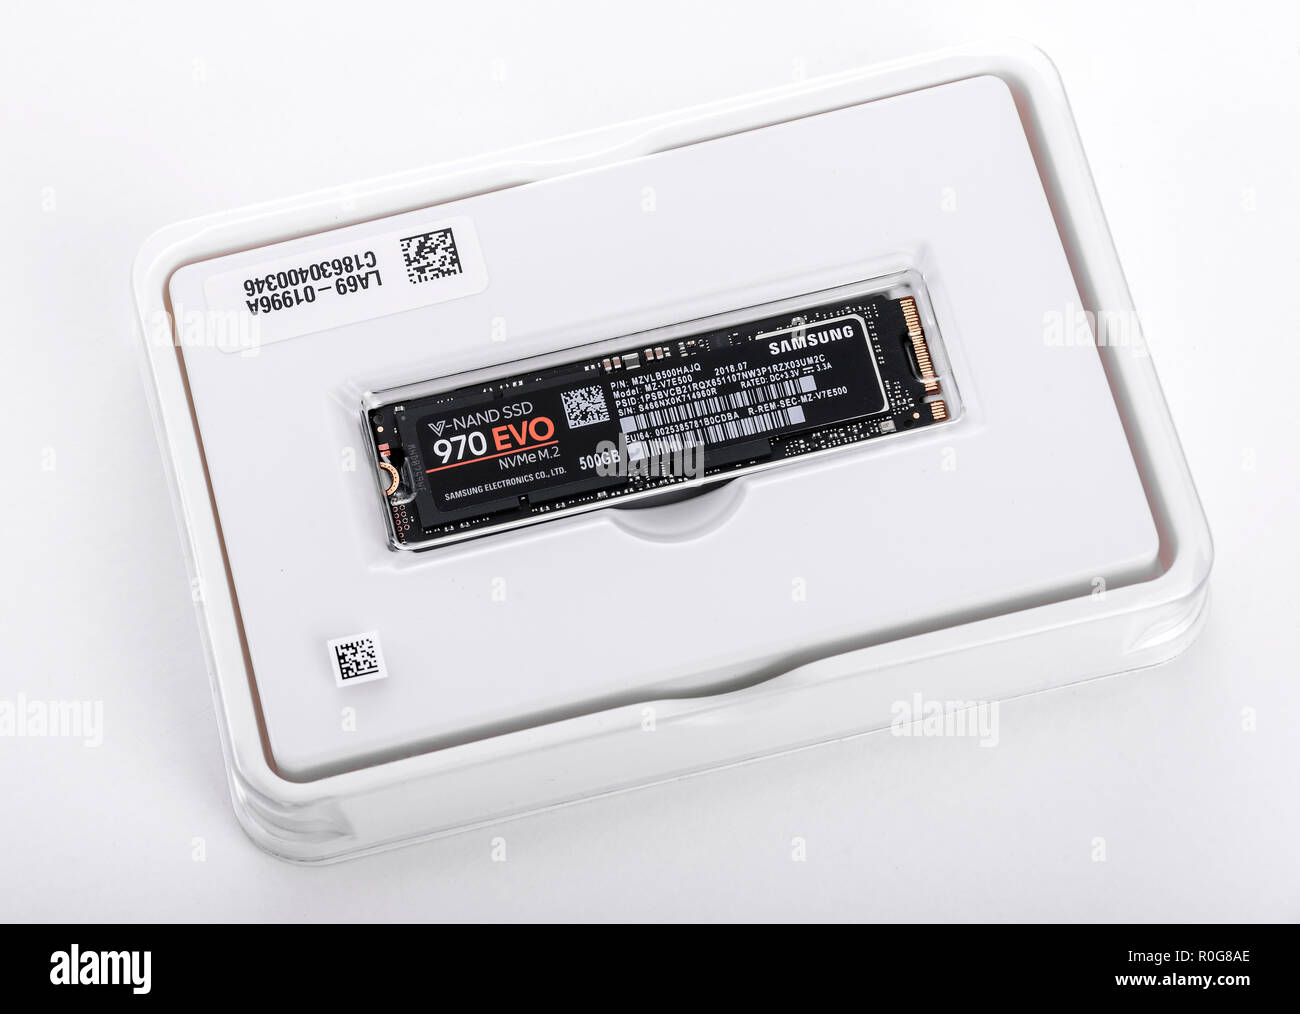 Box of Samsung 970 Evo SSD drive on white background Stock Photo - Alamy